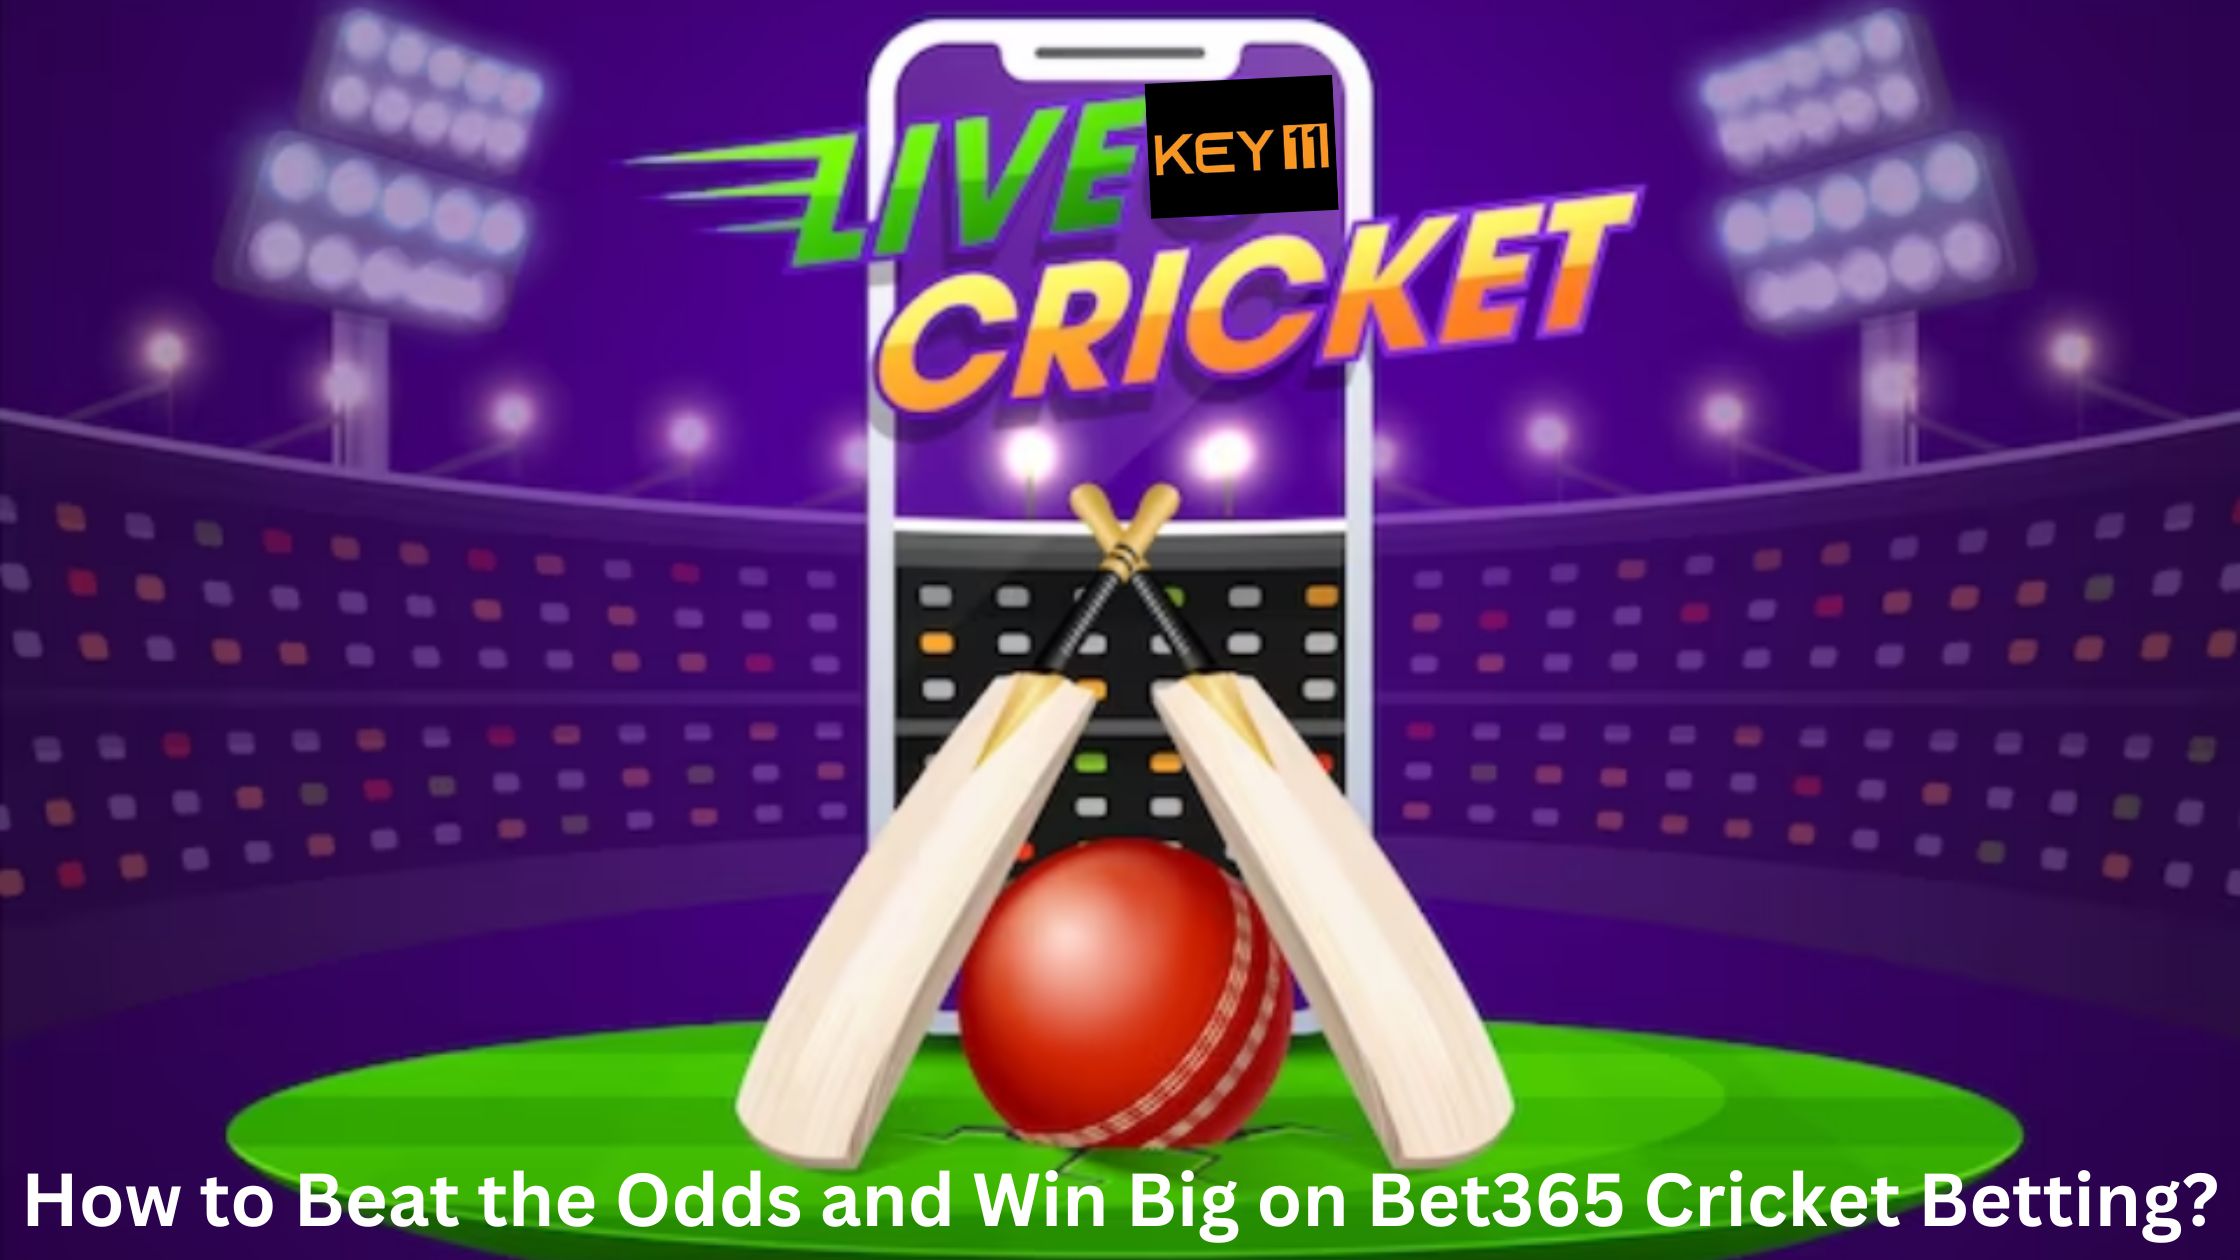 Bet365 Cricket betting tips